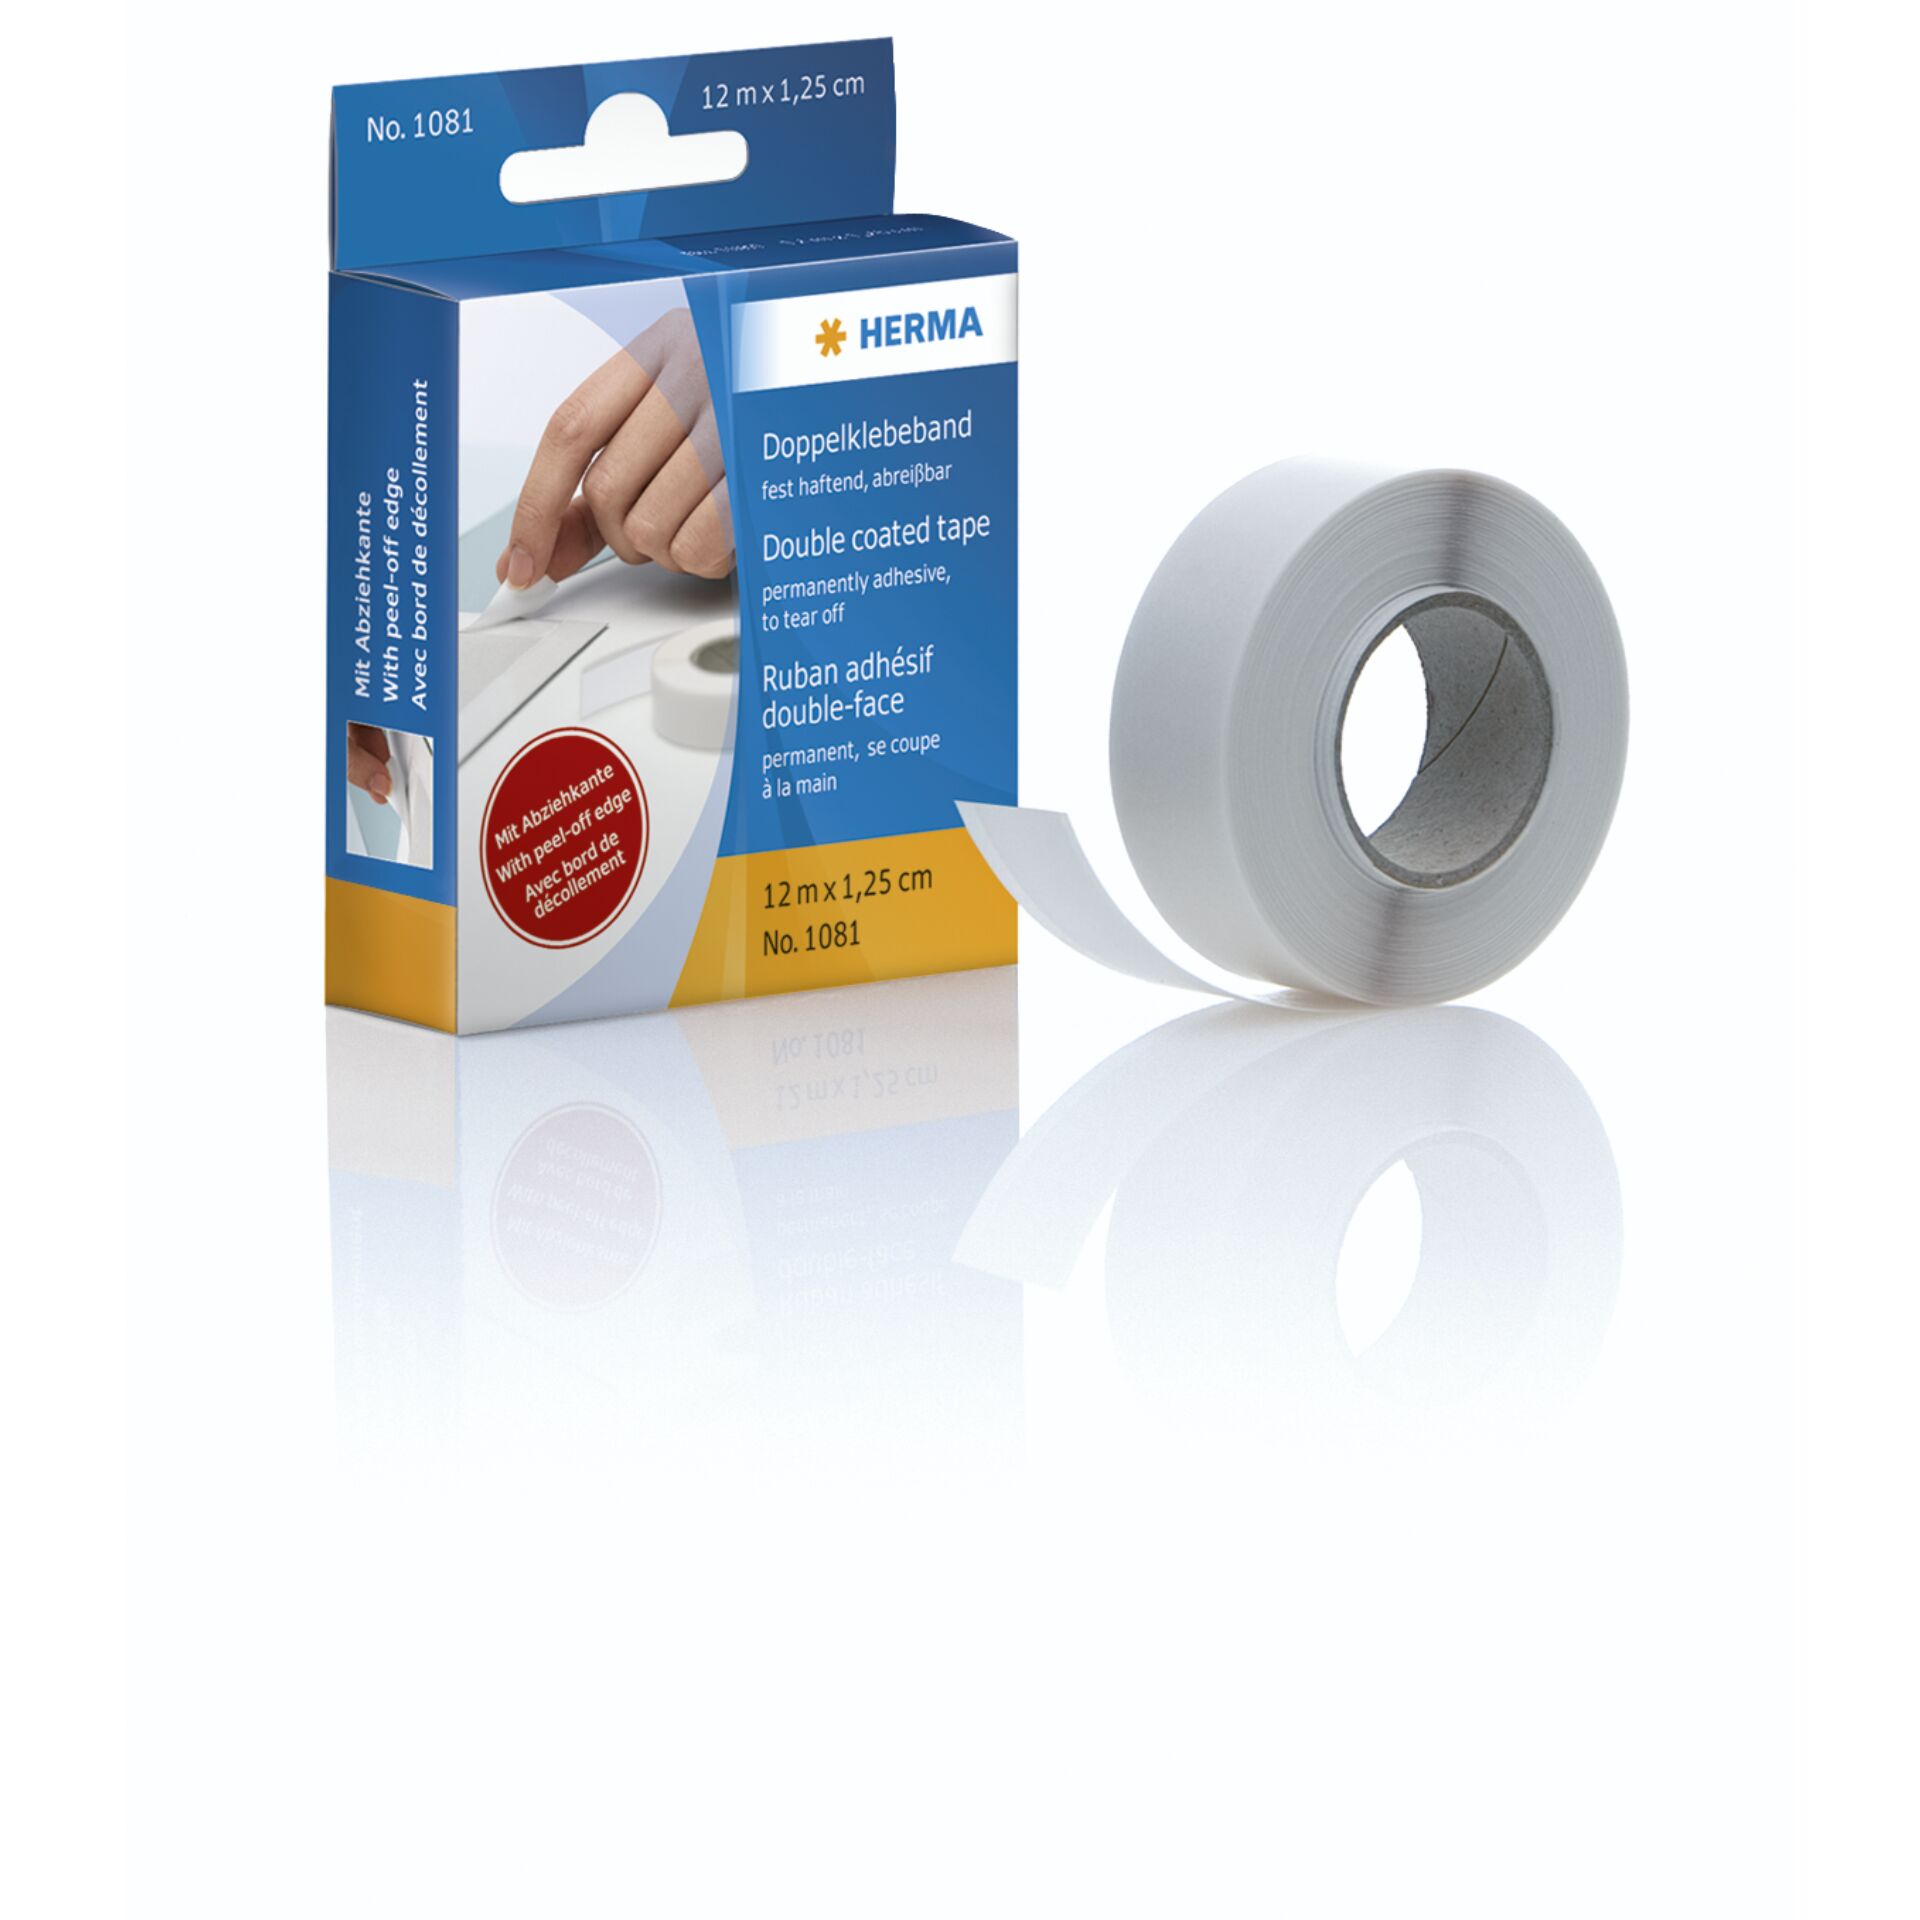 HERMA Adhesive tape refill packs 7,5m gummed width 12mm